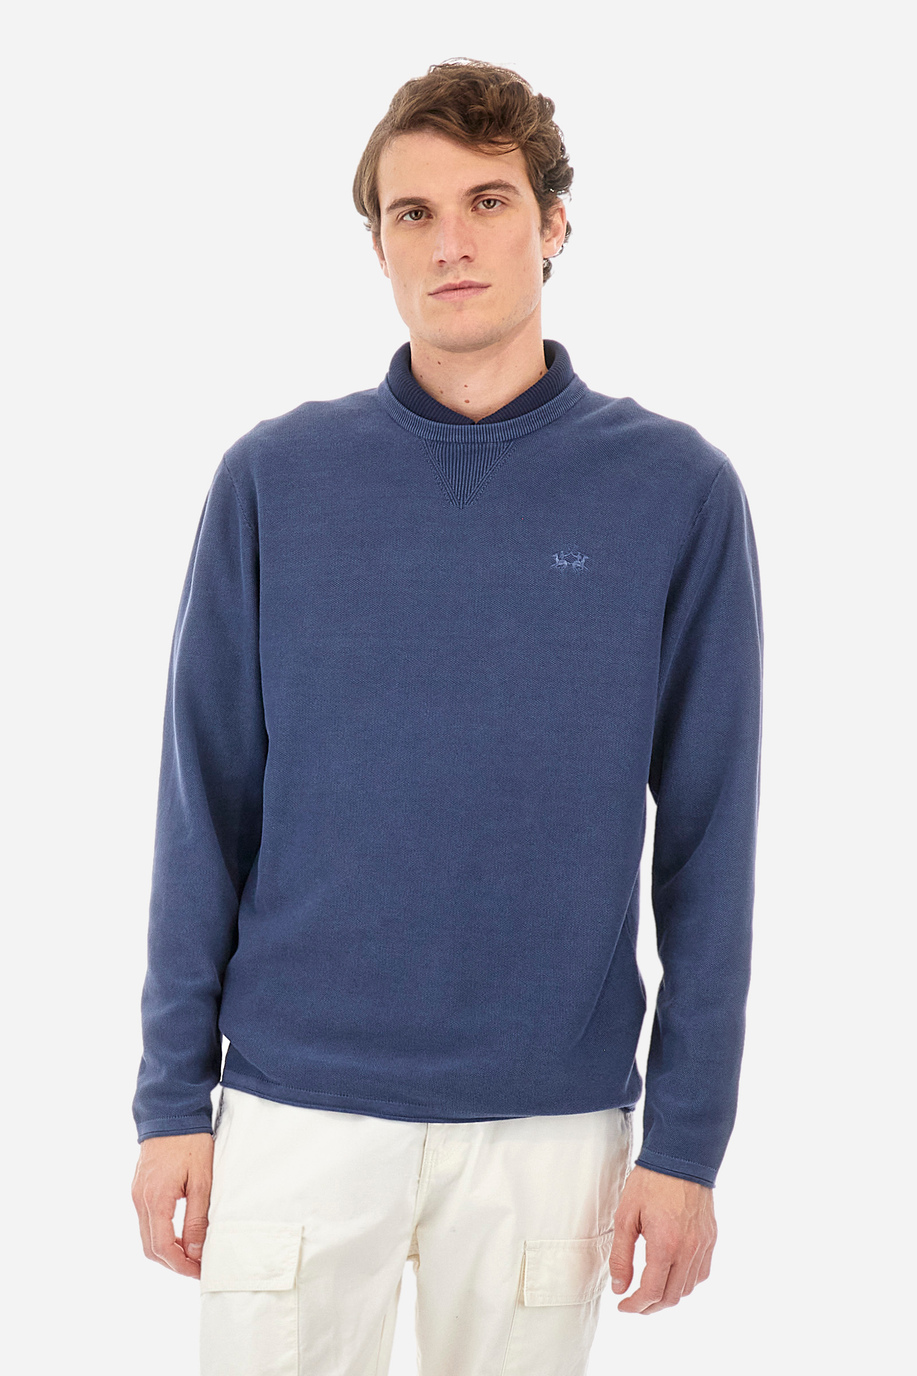 Sweater de algodón de corte recto - Ysmal - Jerséis | La Martina - Official Online Shop